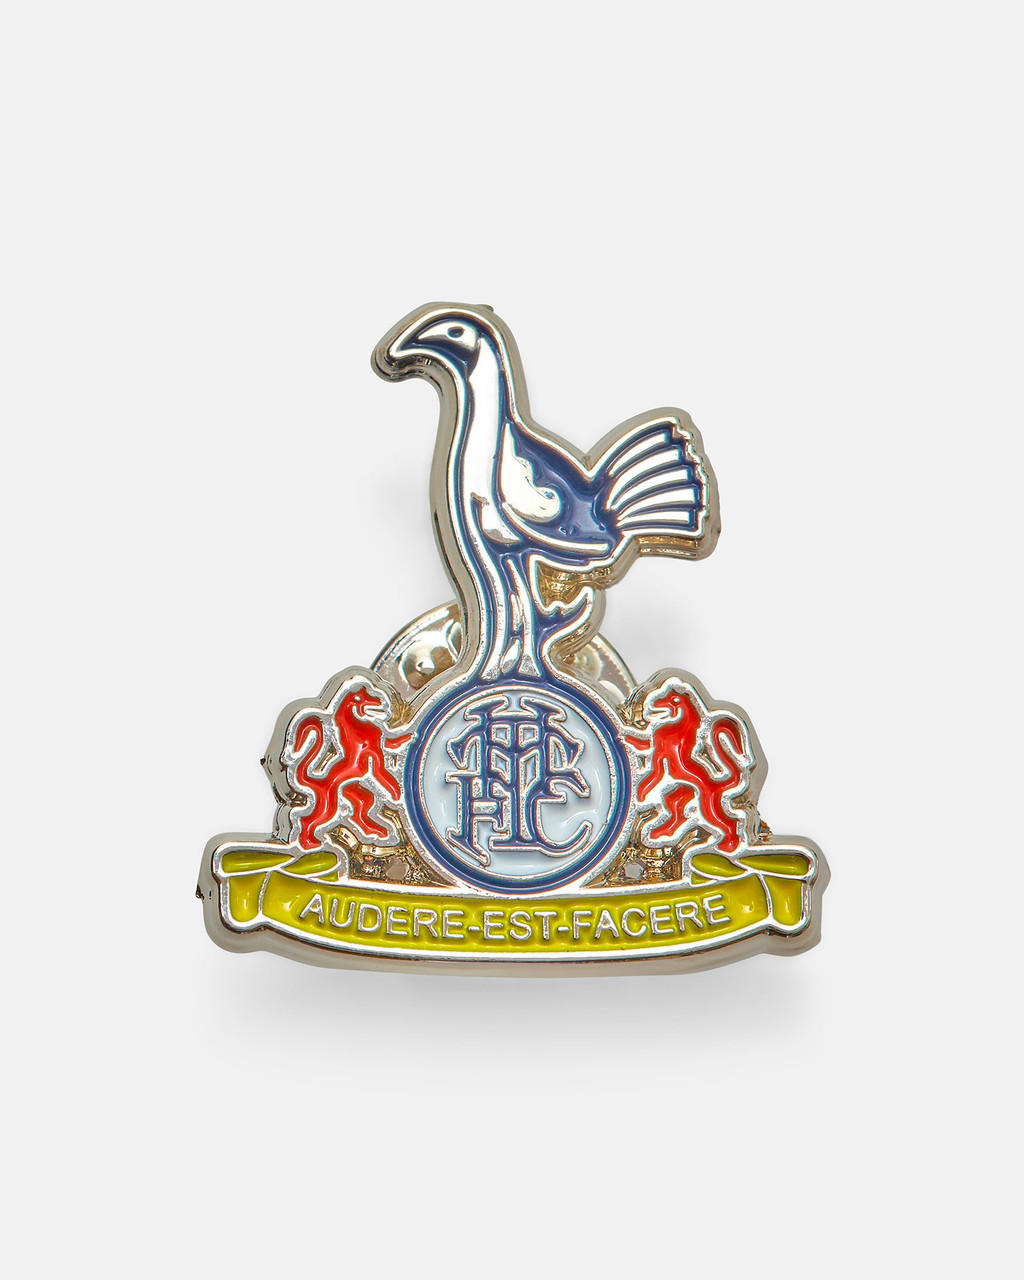  Spurs Retro Crest Pin Badge 